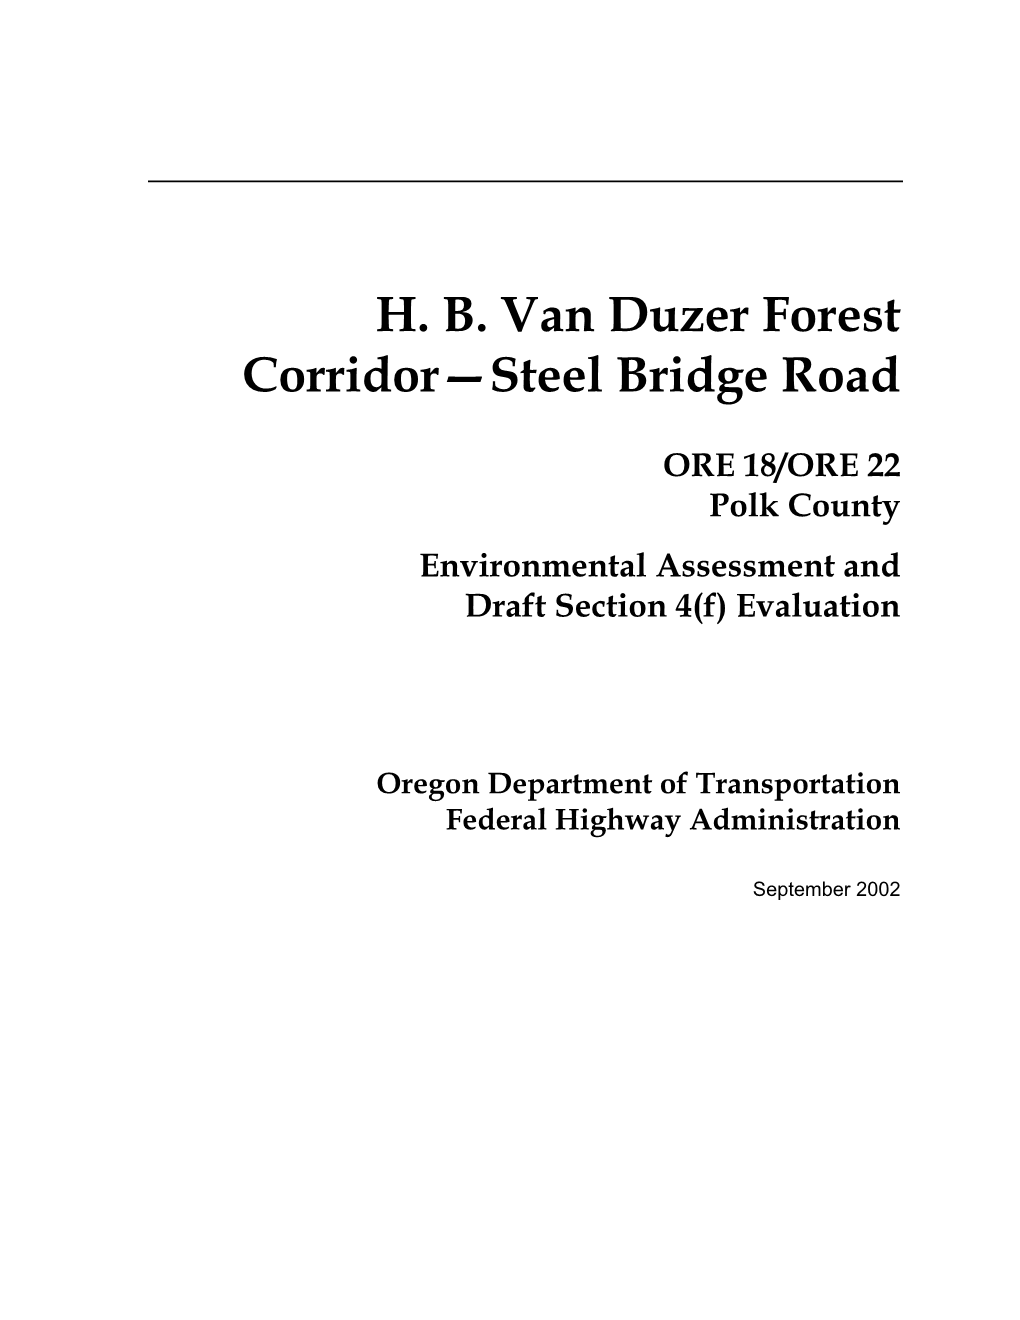 H.B. Van Duzer Environmental Assessment